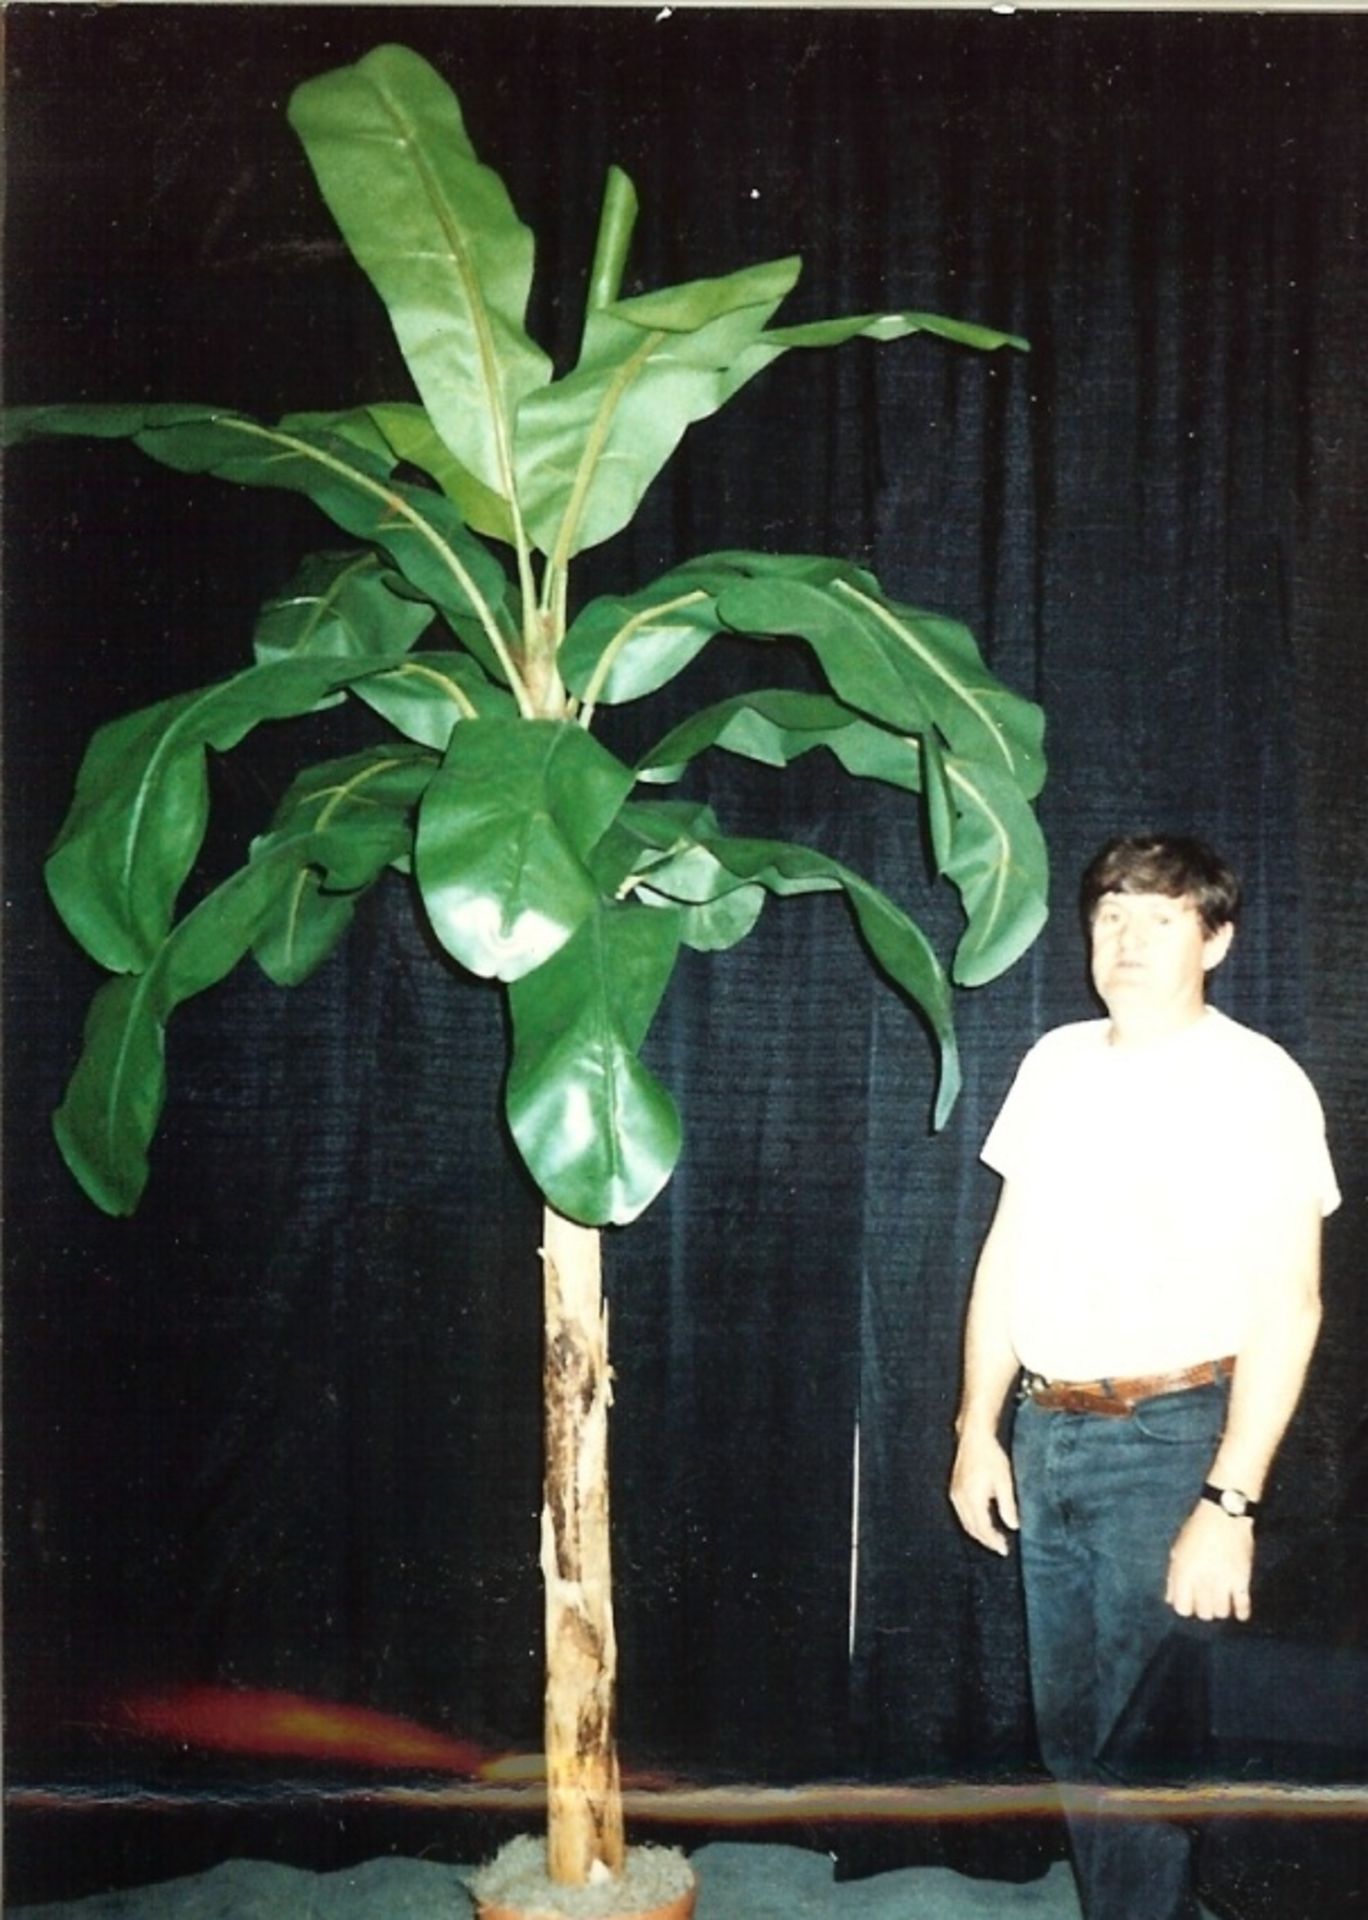 Banana Flat Leaf Palm trees 7-8 feet tall